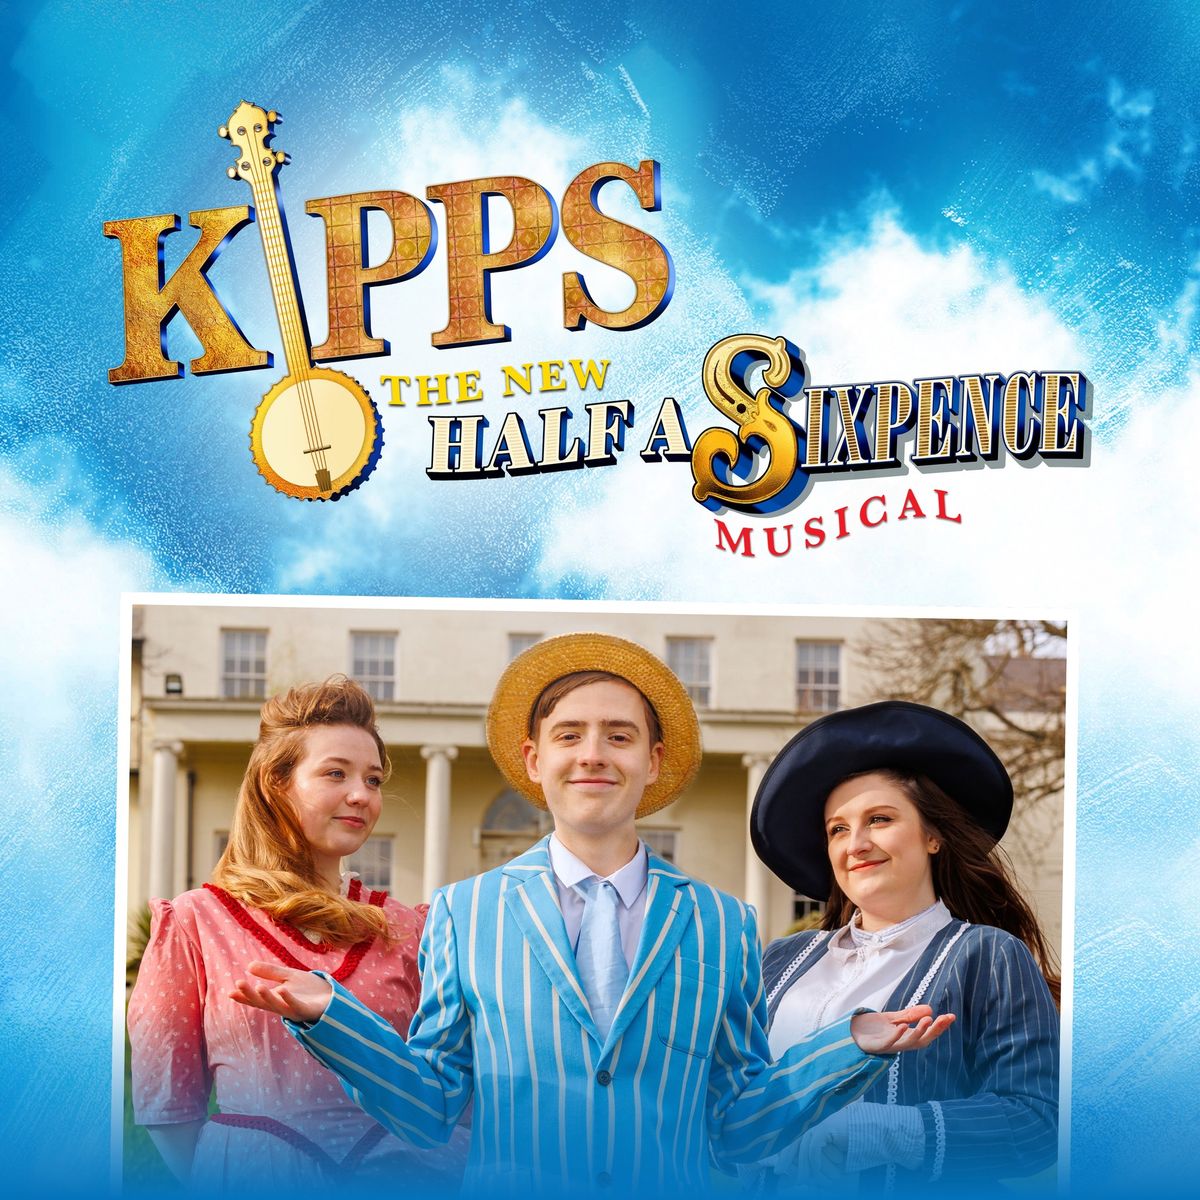 Kipps - The new Half a Sixpence Musical